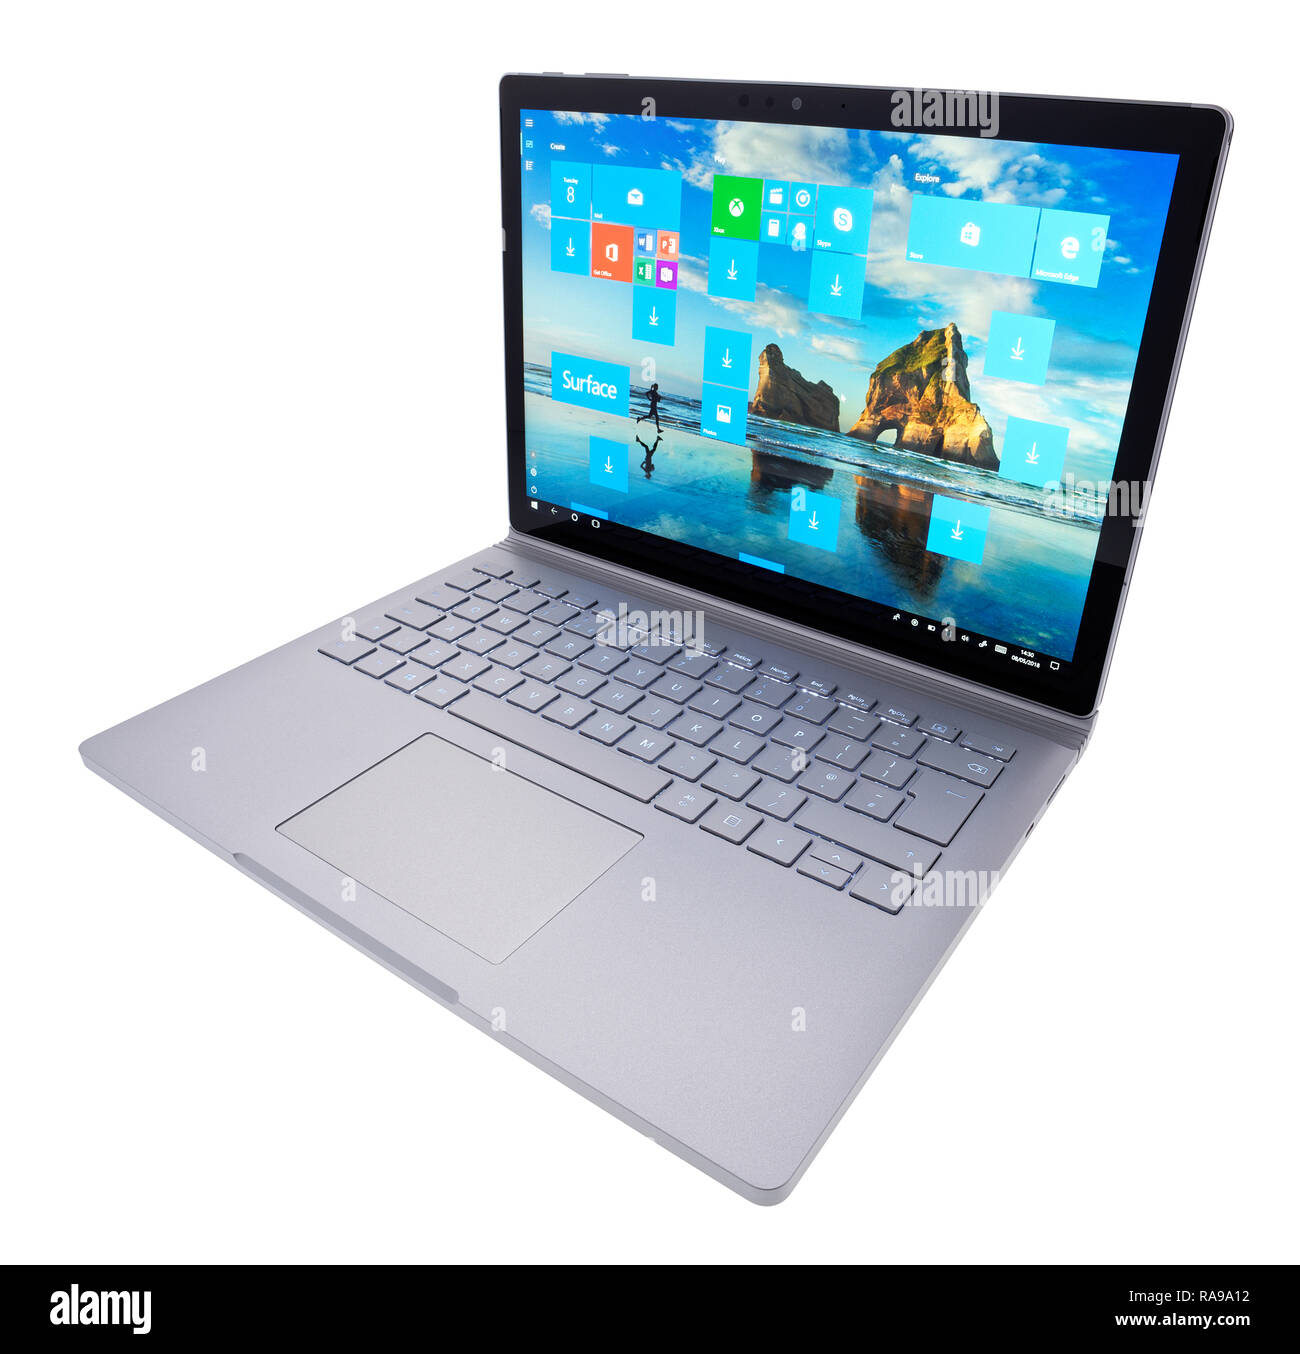 Microsoft Surface Book, versatile laptop computer. Stock Photo